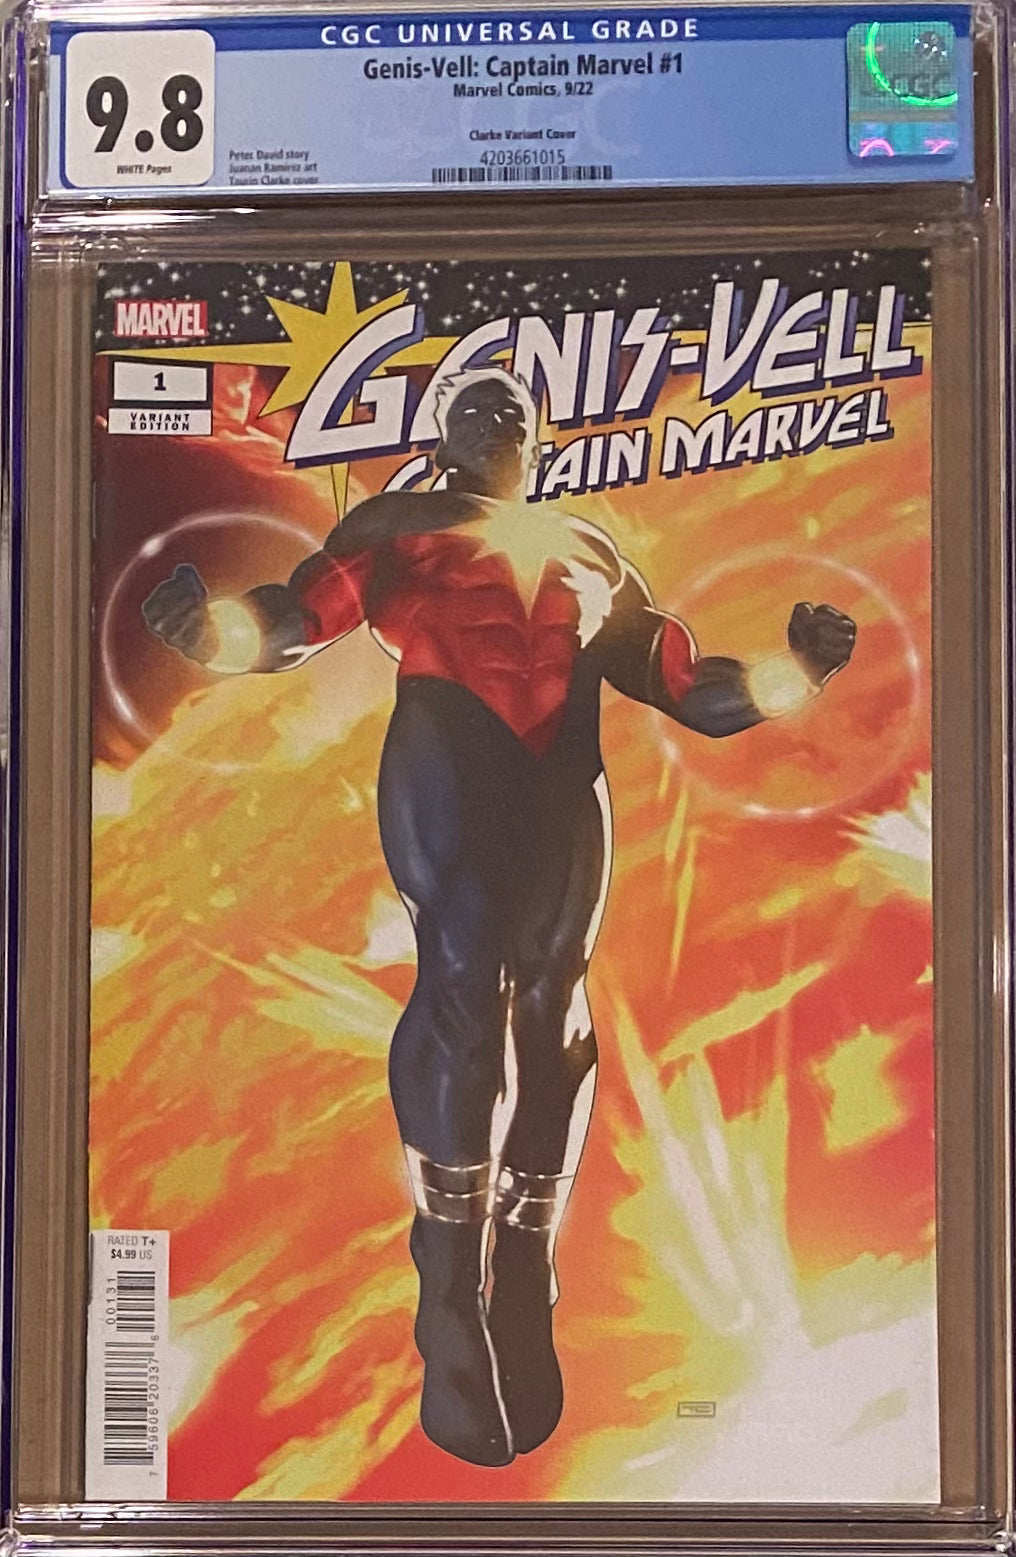 Genis-Vell: Captain Marvel #1 Clarke 1:50 Retailer Incentive Variant CGC 9.8